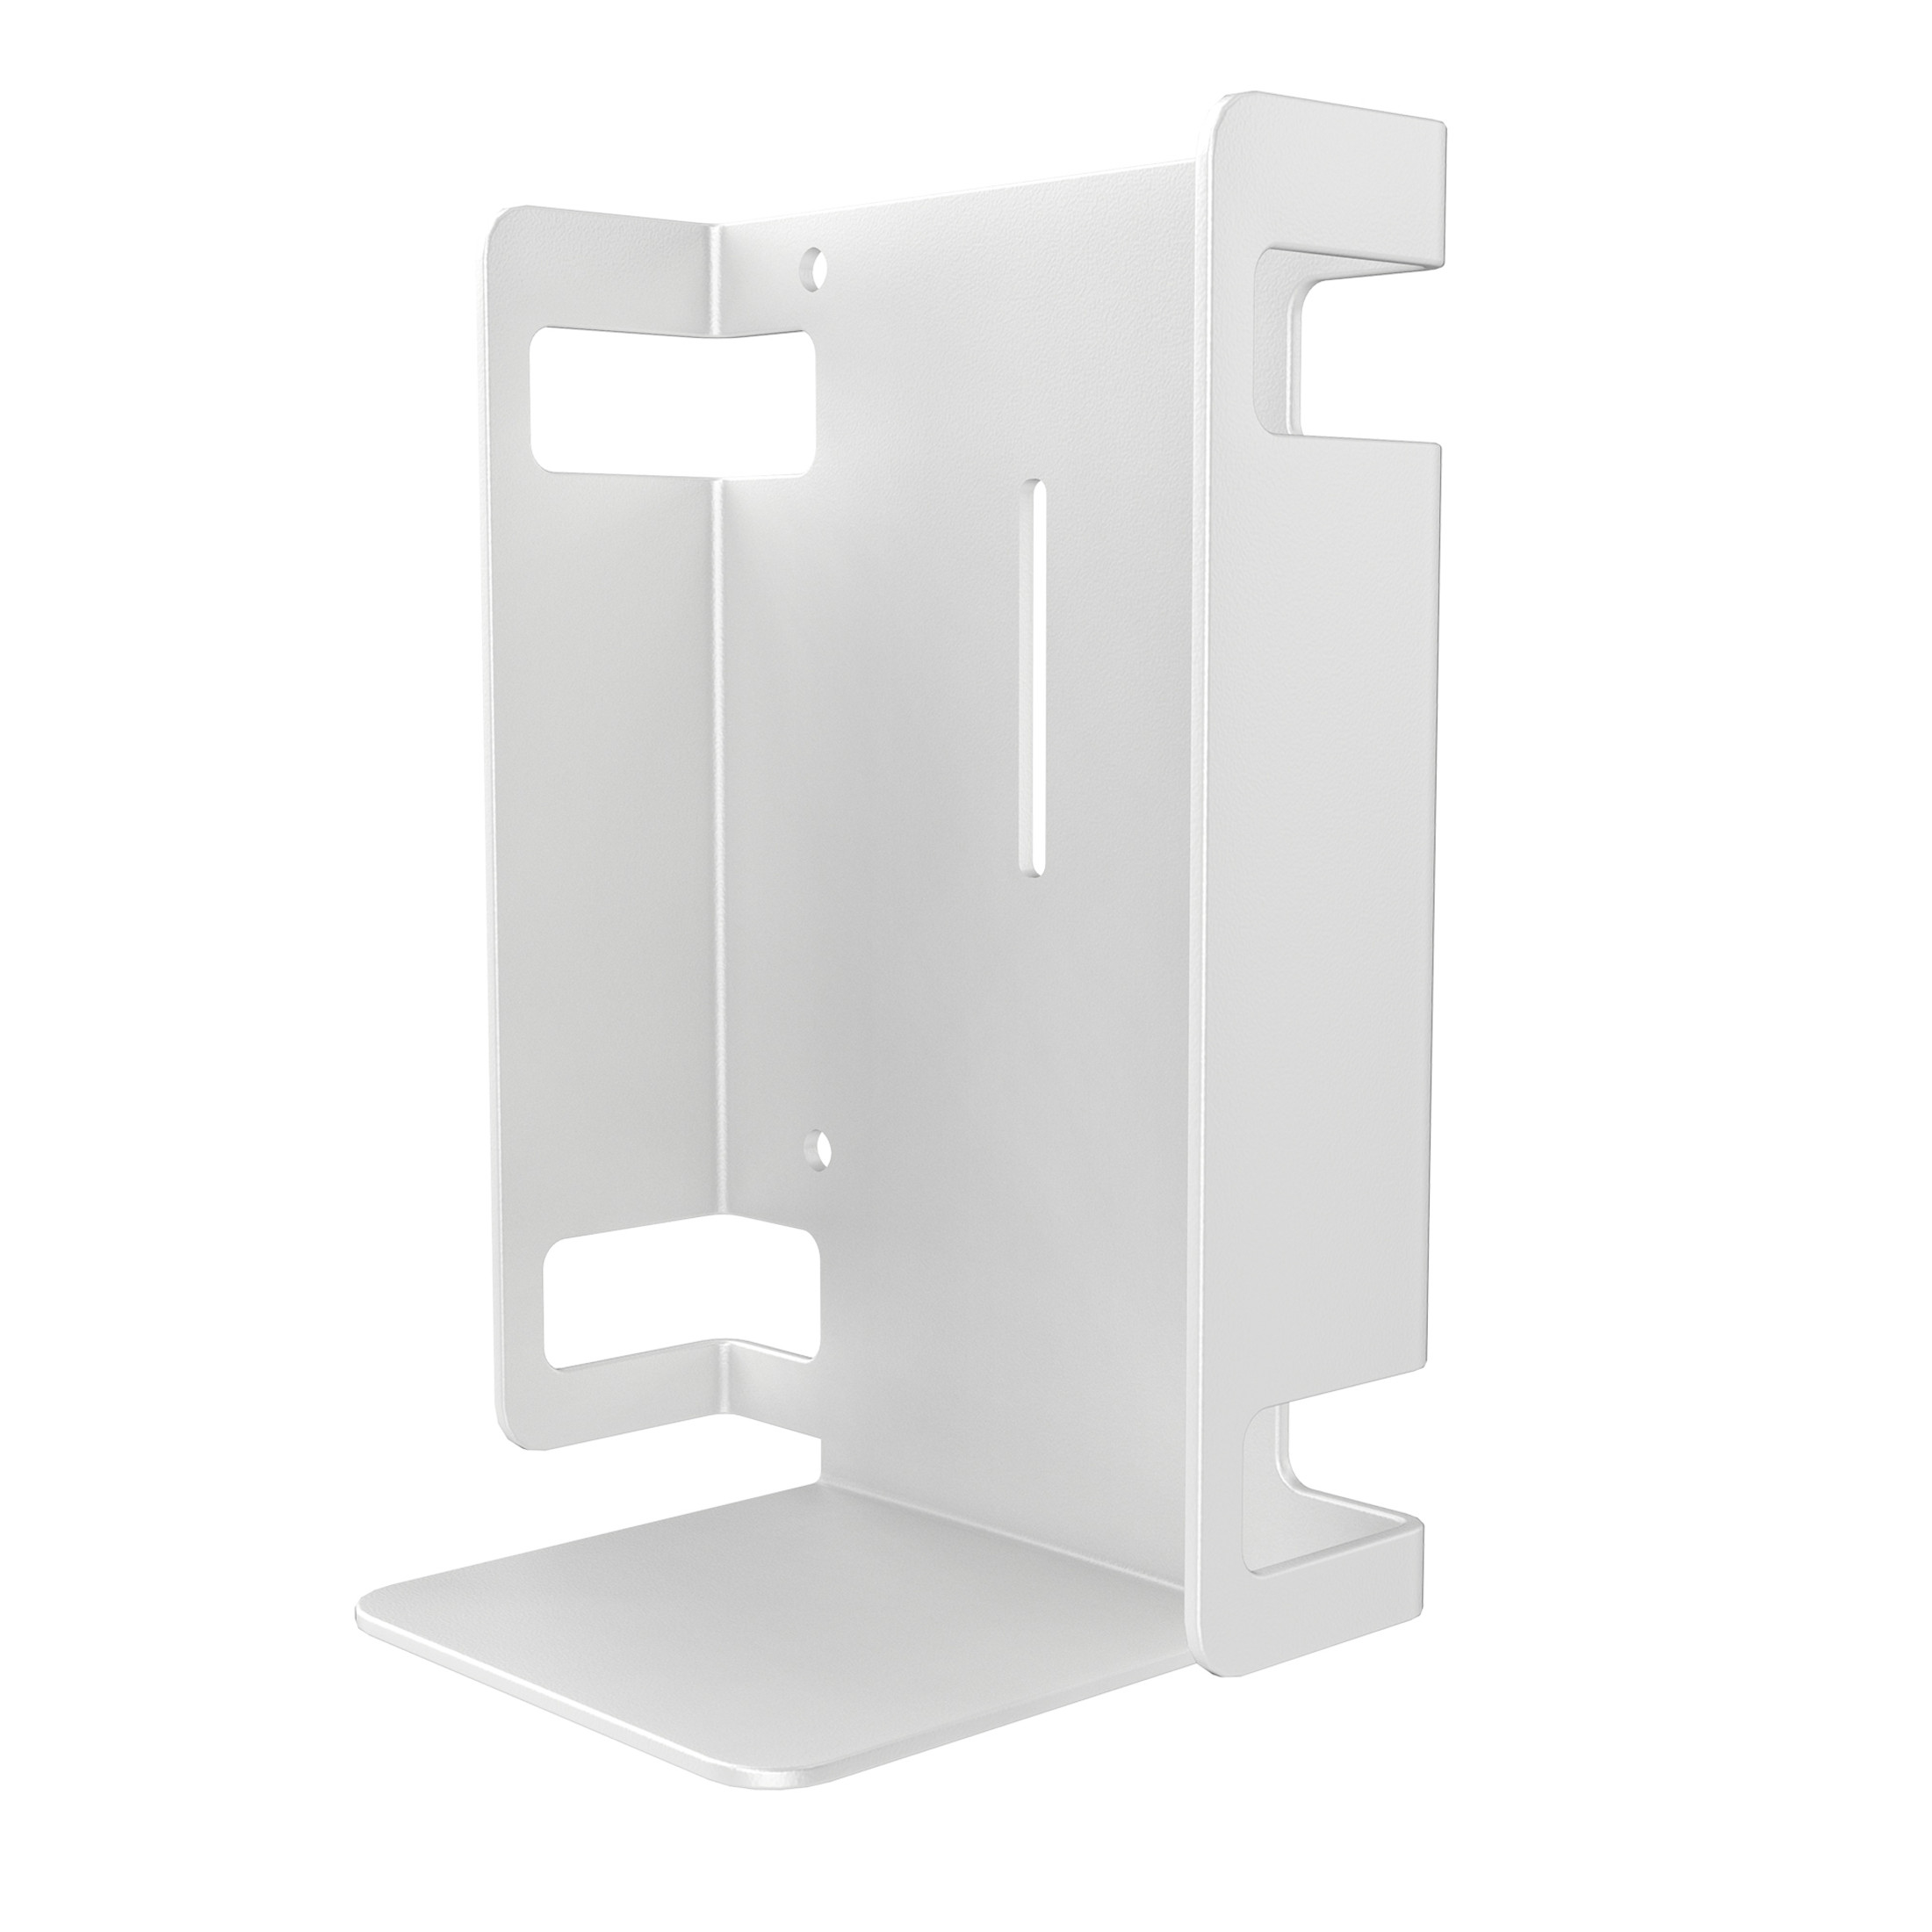 Cta Digital Accessories Metal Sanitizer Bottle Holder for Mobile Floor Stands (White)1.6″ x 2.2″ x 4.3″ xMetal1White ADD-SBMW